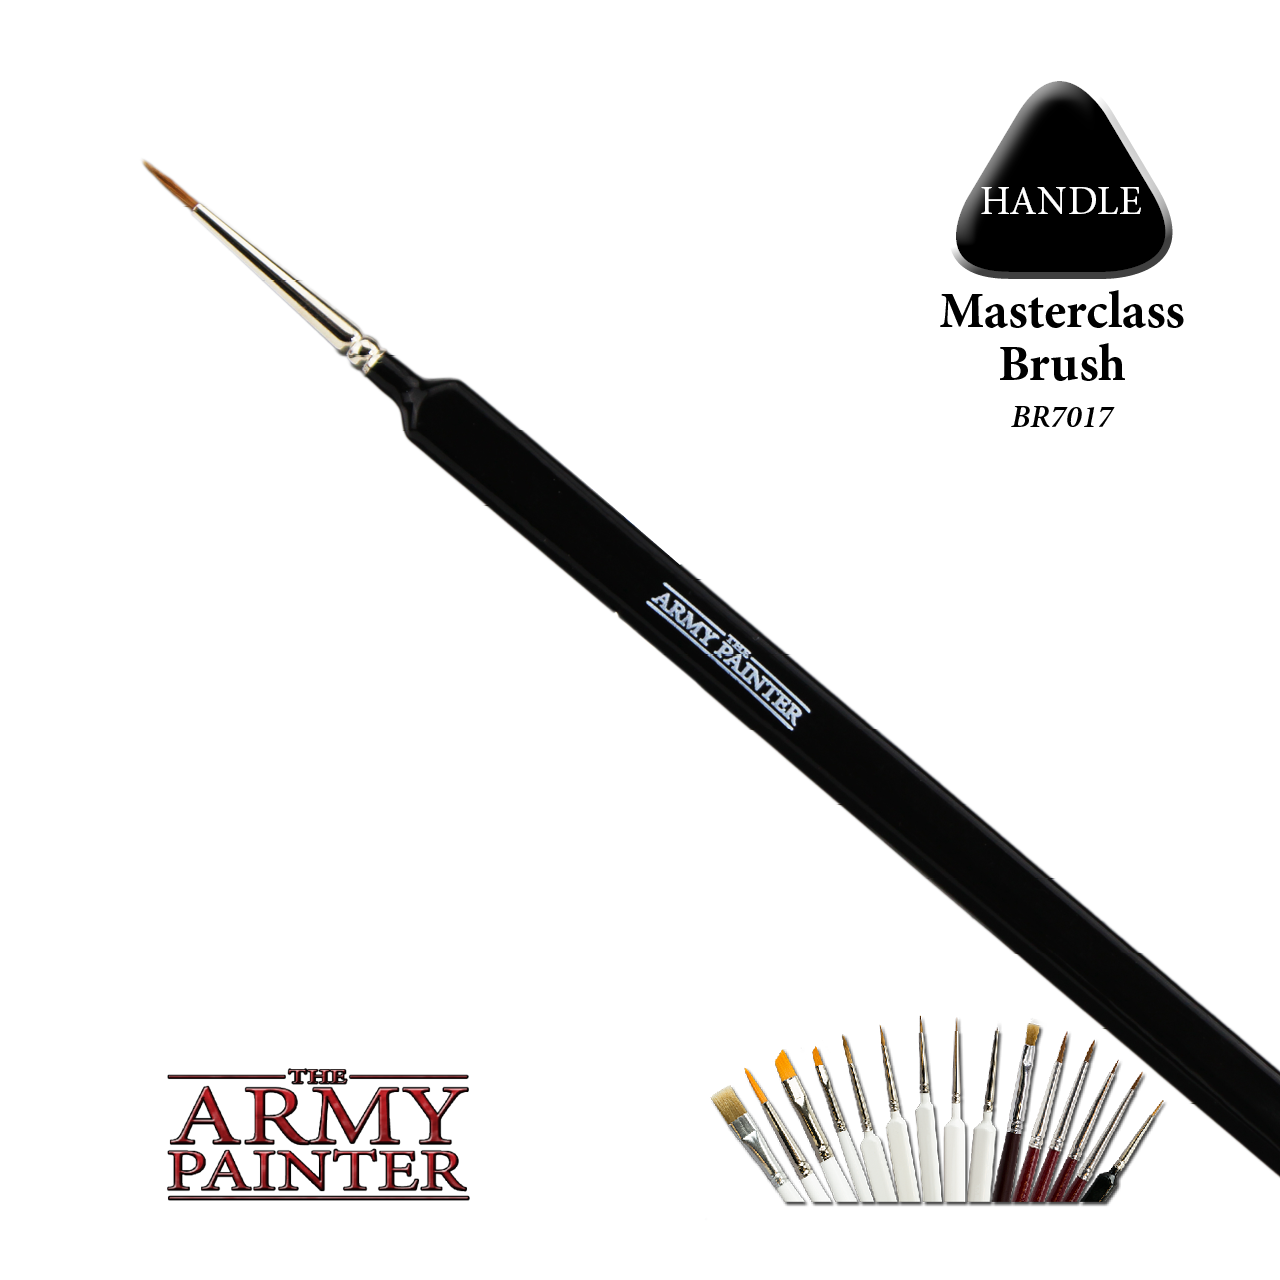 The Army Painter Masterclass Brush